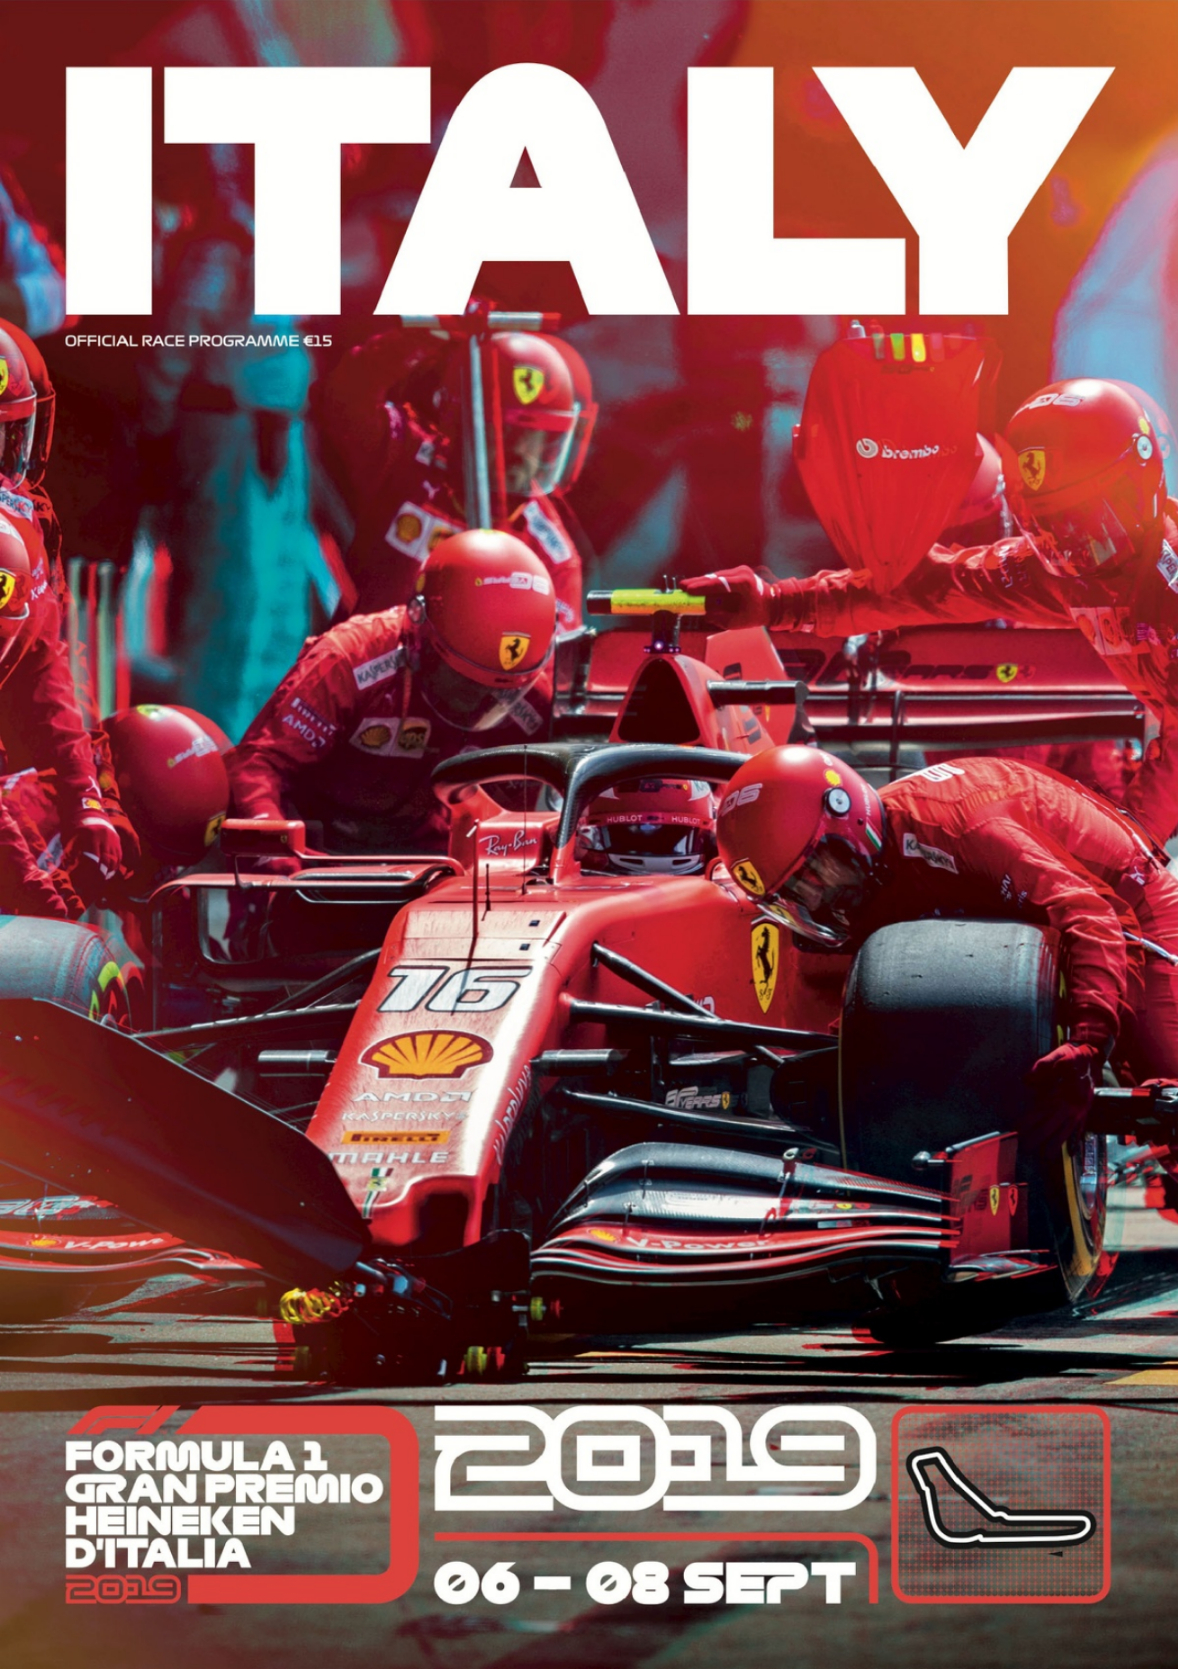 2019 Formula 1 World Championship Programmes | The Motor Racing ...